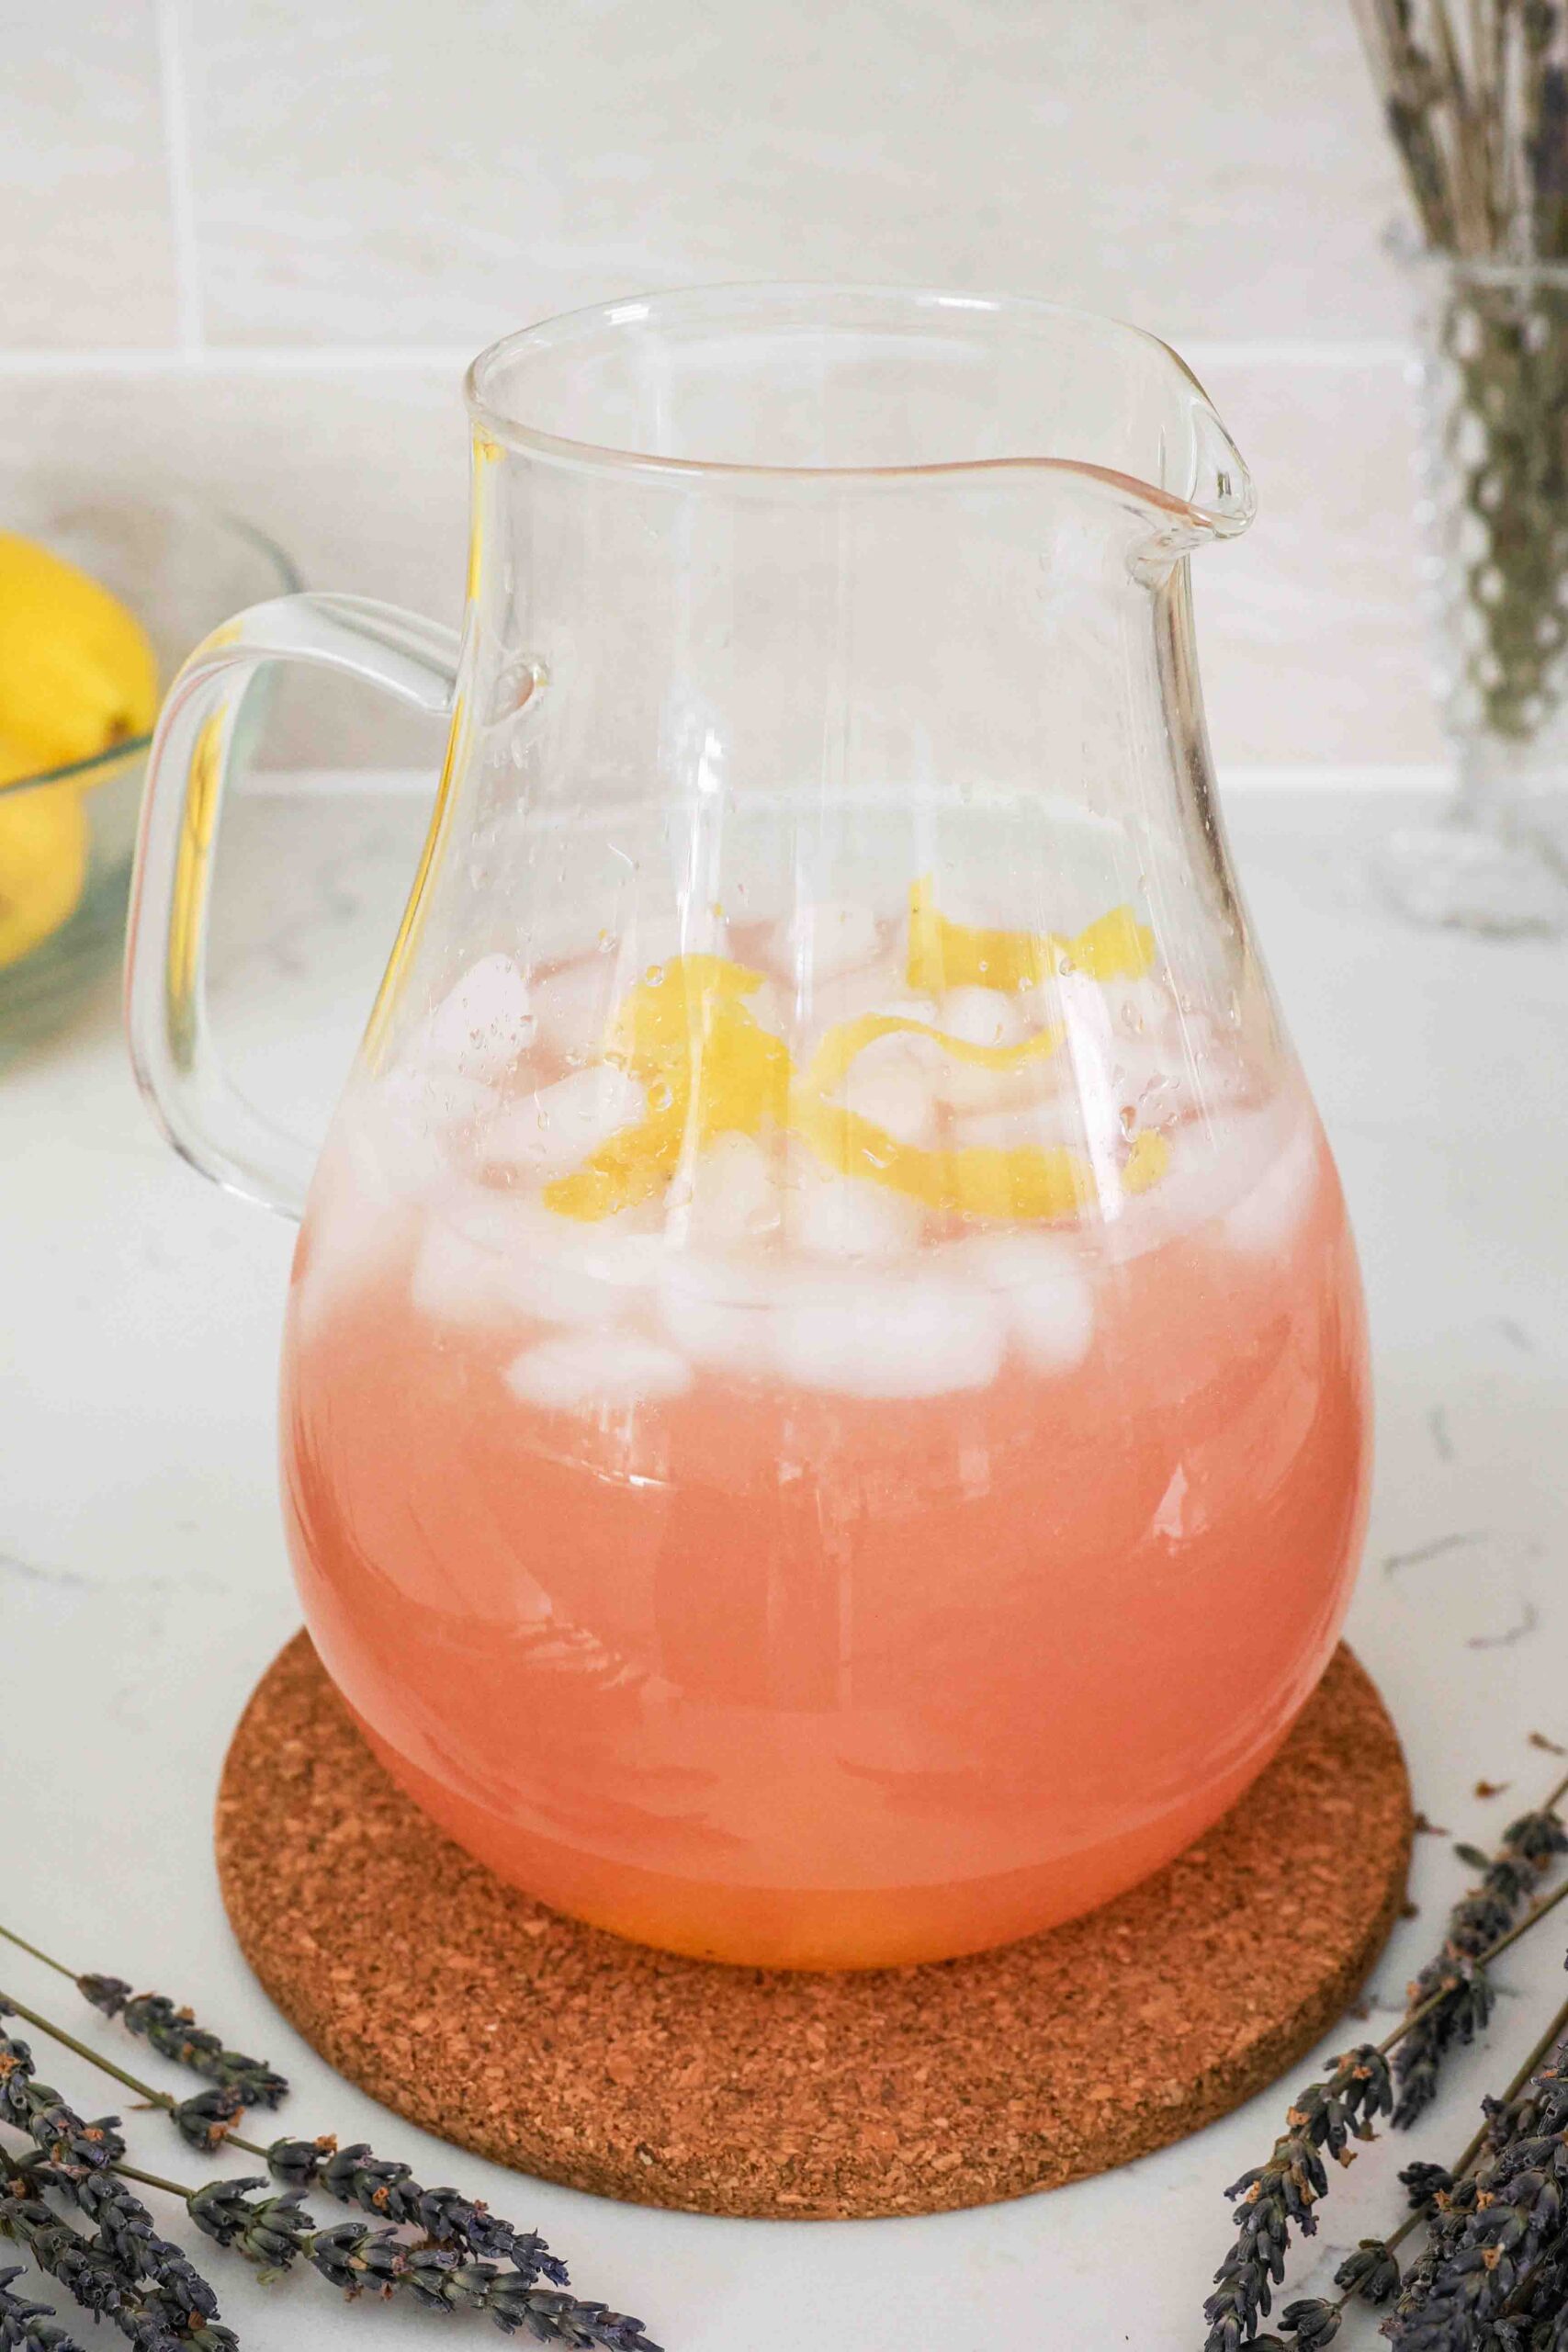 Lemon zest peels and ice cubes float in a pitcher of pink lavender lemonade.